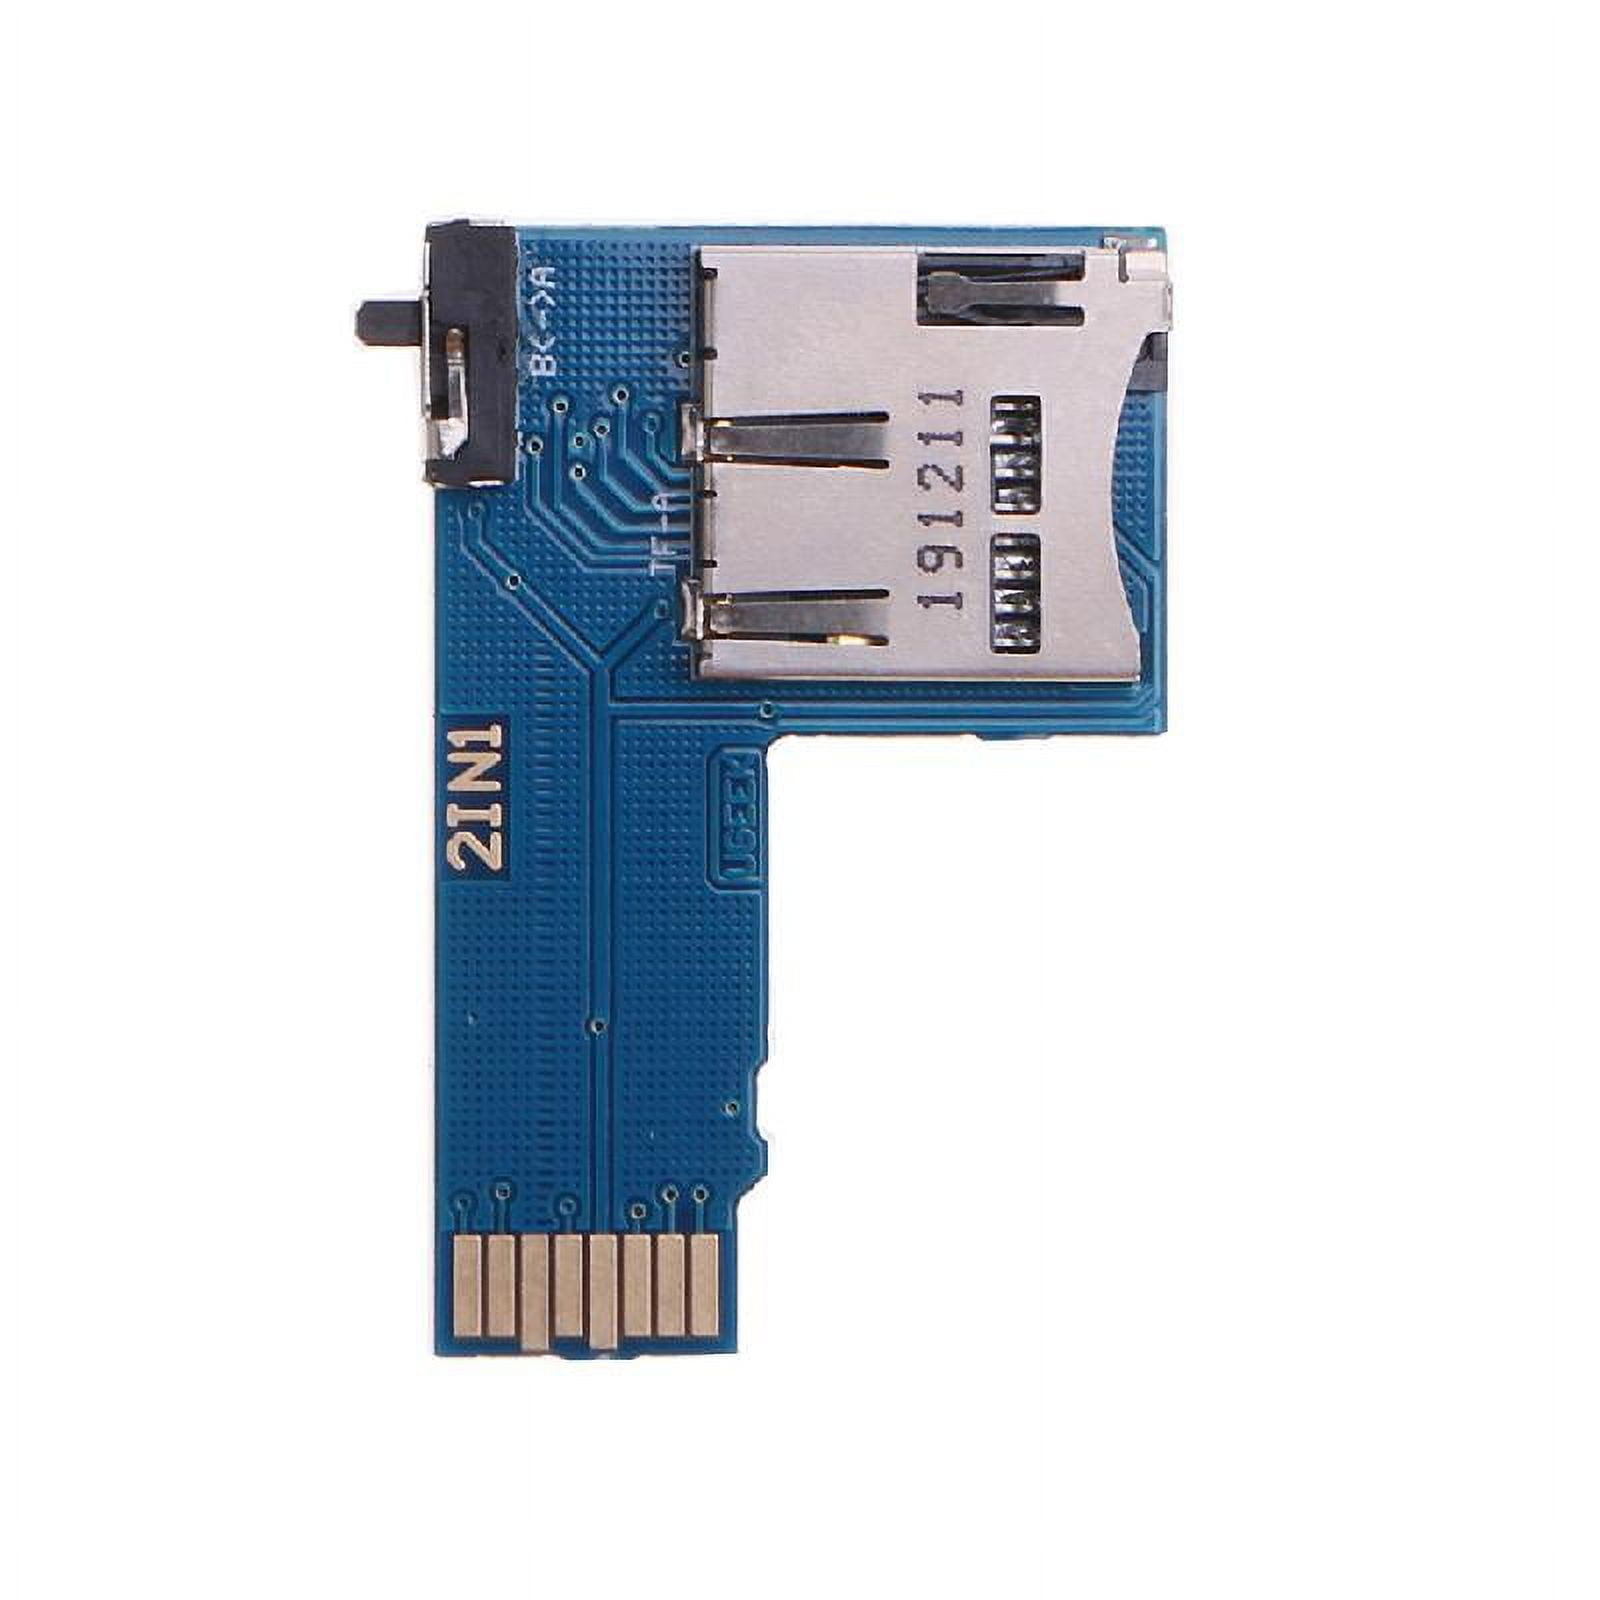 2 en 1 micro sd tf card reader adaptateur - Cdiscount